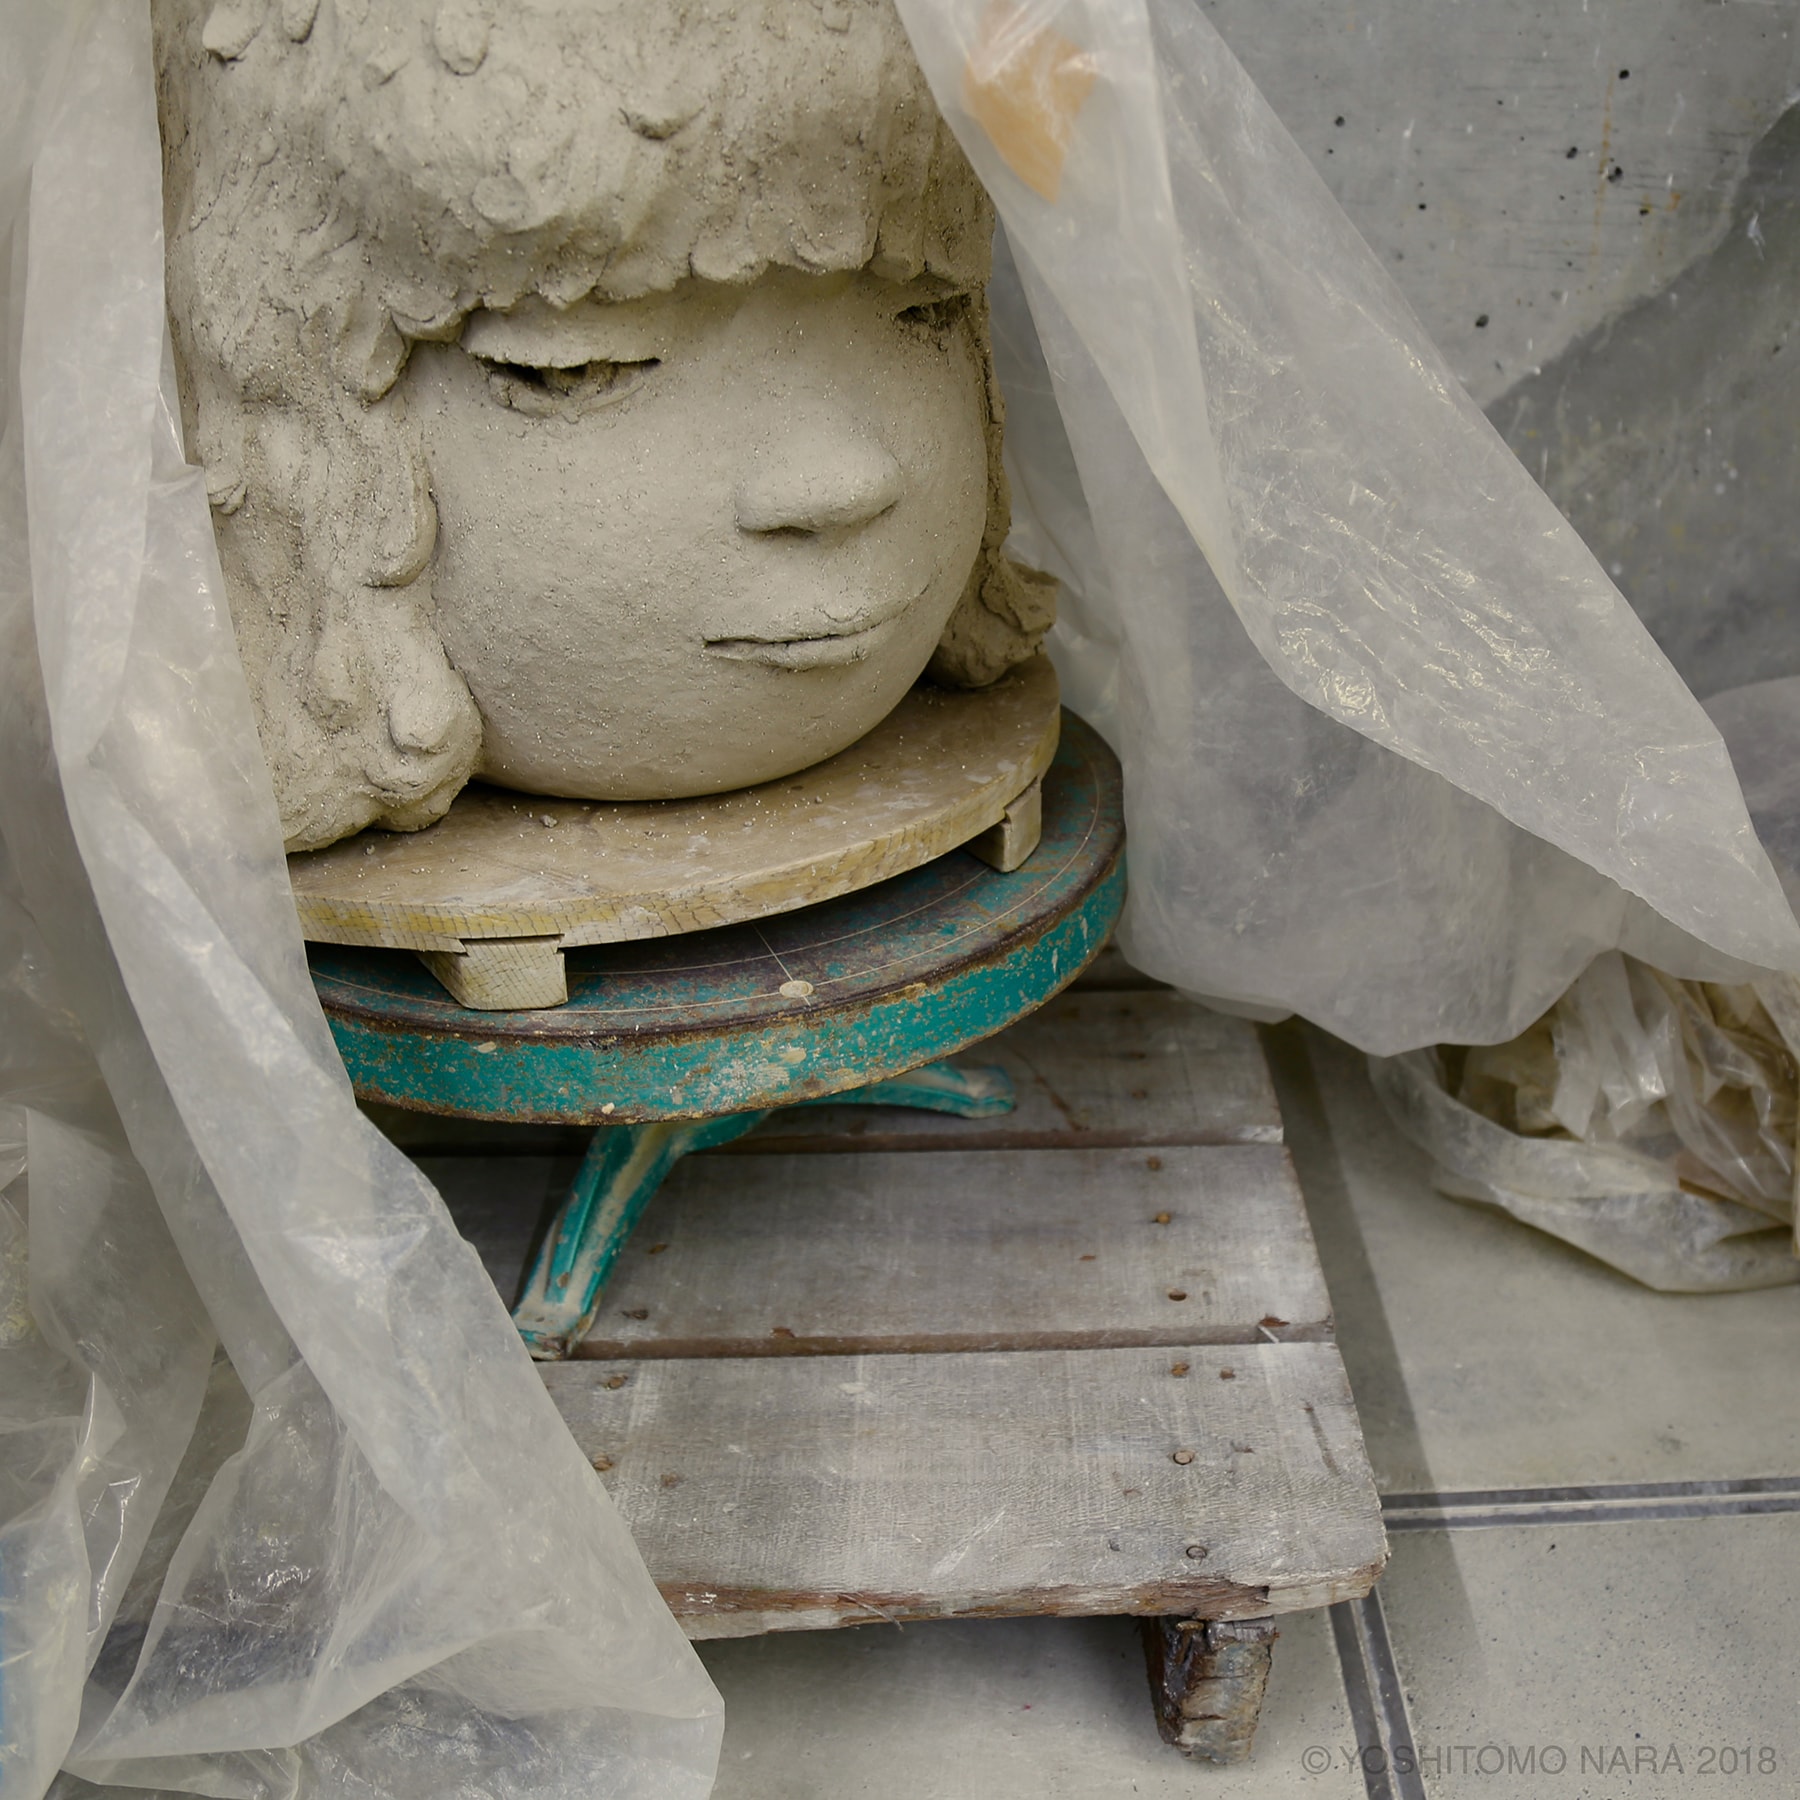 奈良美智將於香港舉辦「Ceramic Works and...」個展